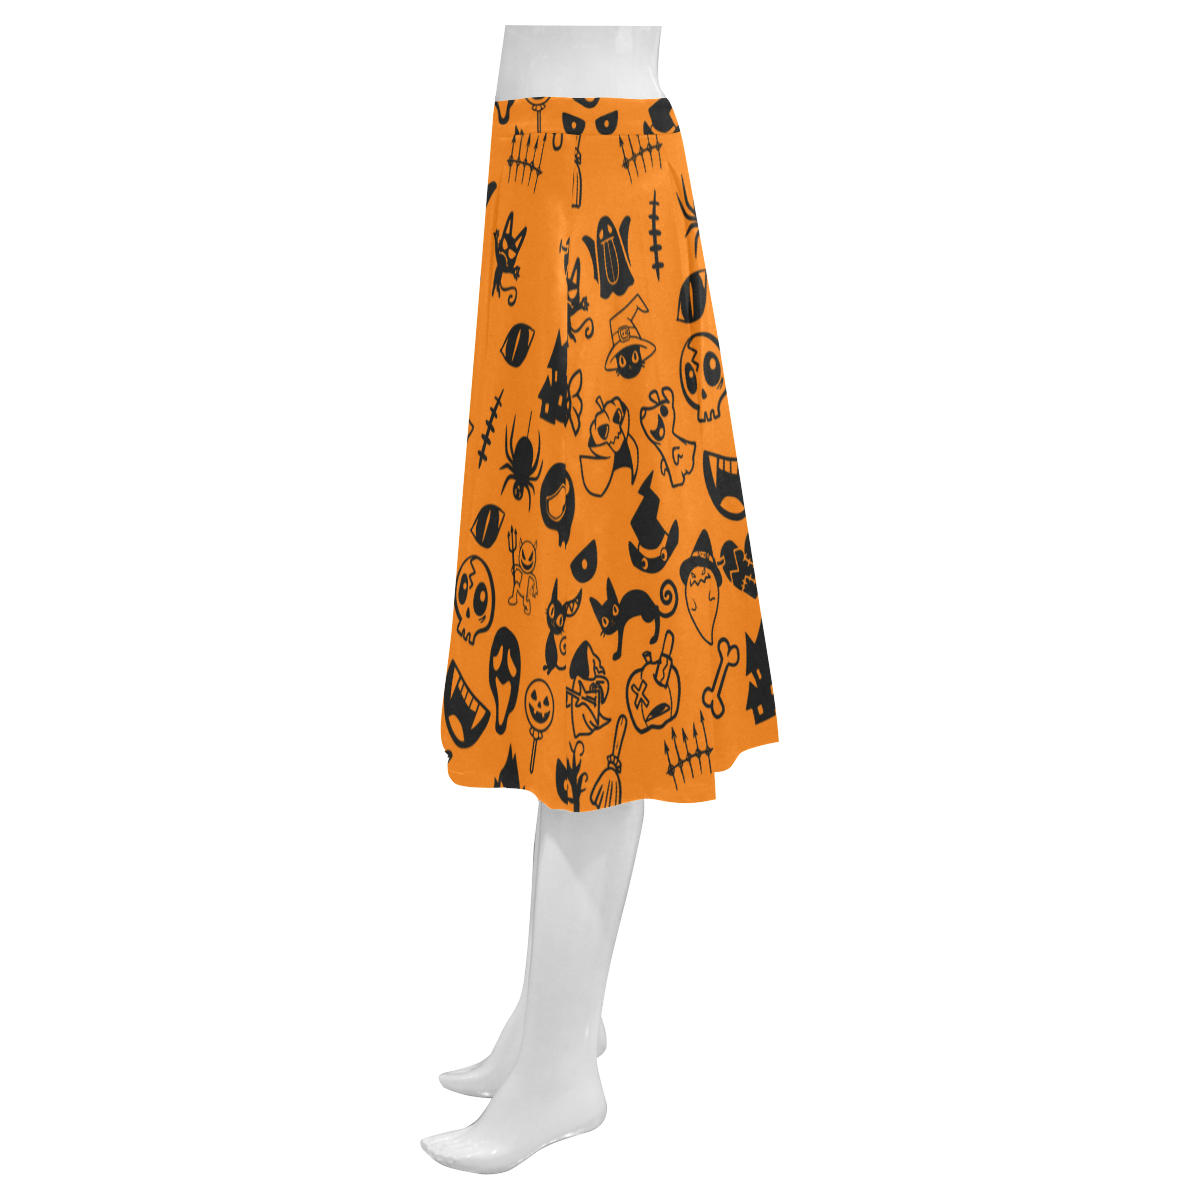 Fun Halloween Characters In Orange And Black Mnemosyne Women's Crepe Skirt (Model D16)